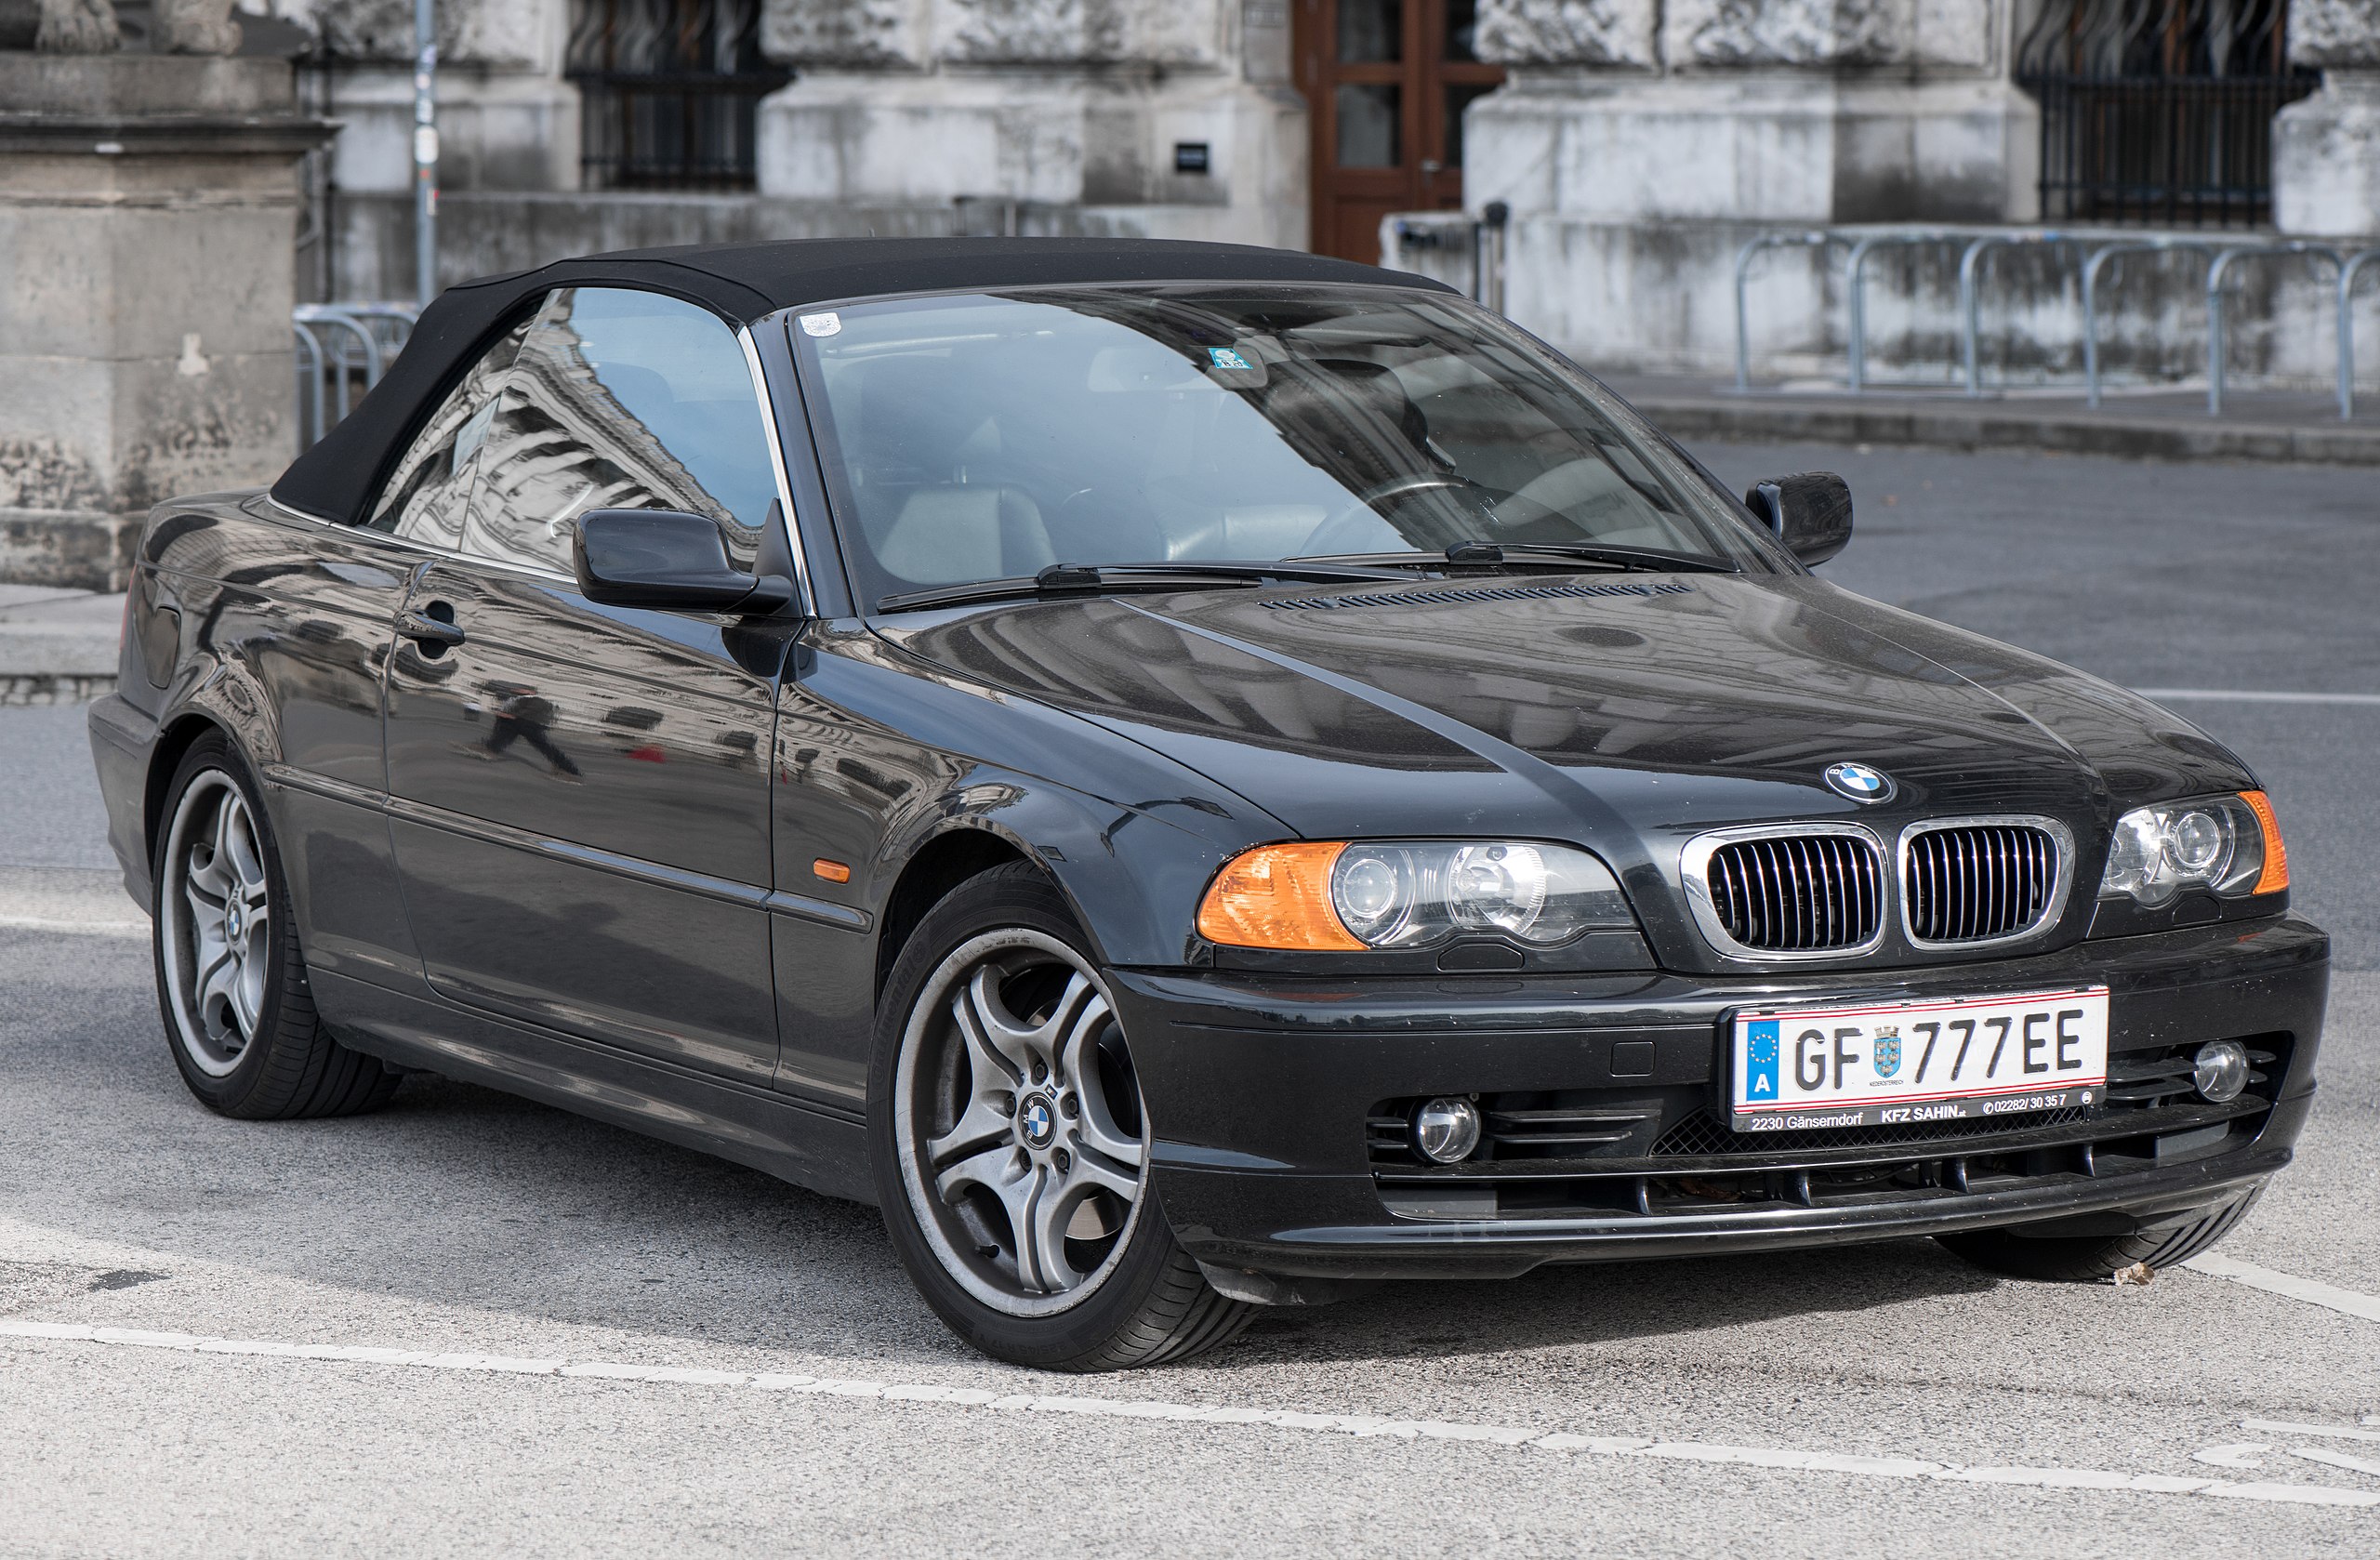 File:BMW E46 19.09.20 JM (3).jpg - Wikimedia Commons